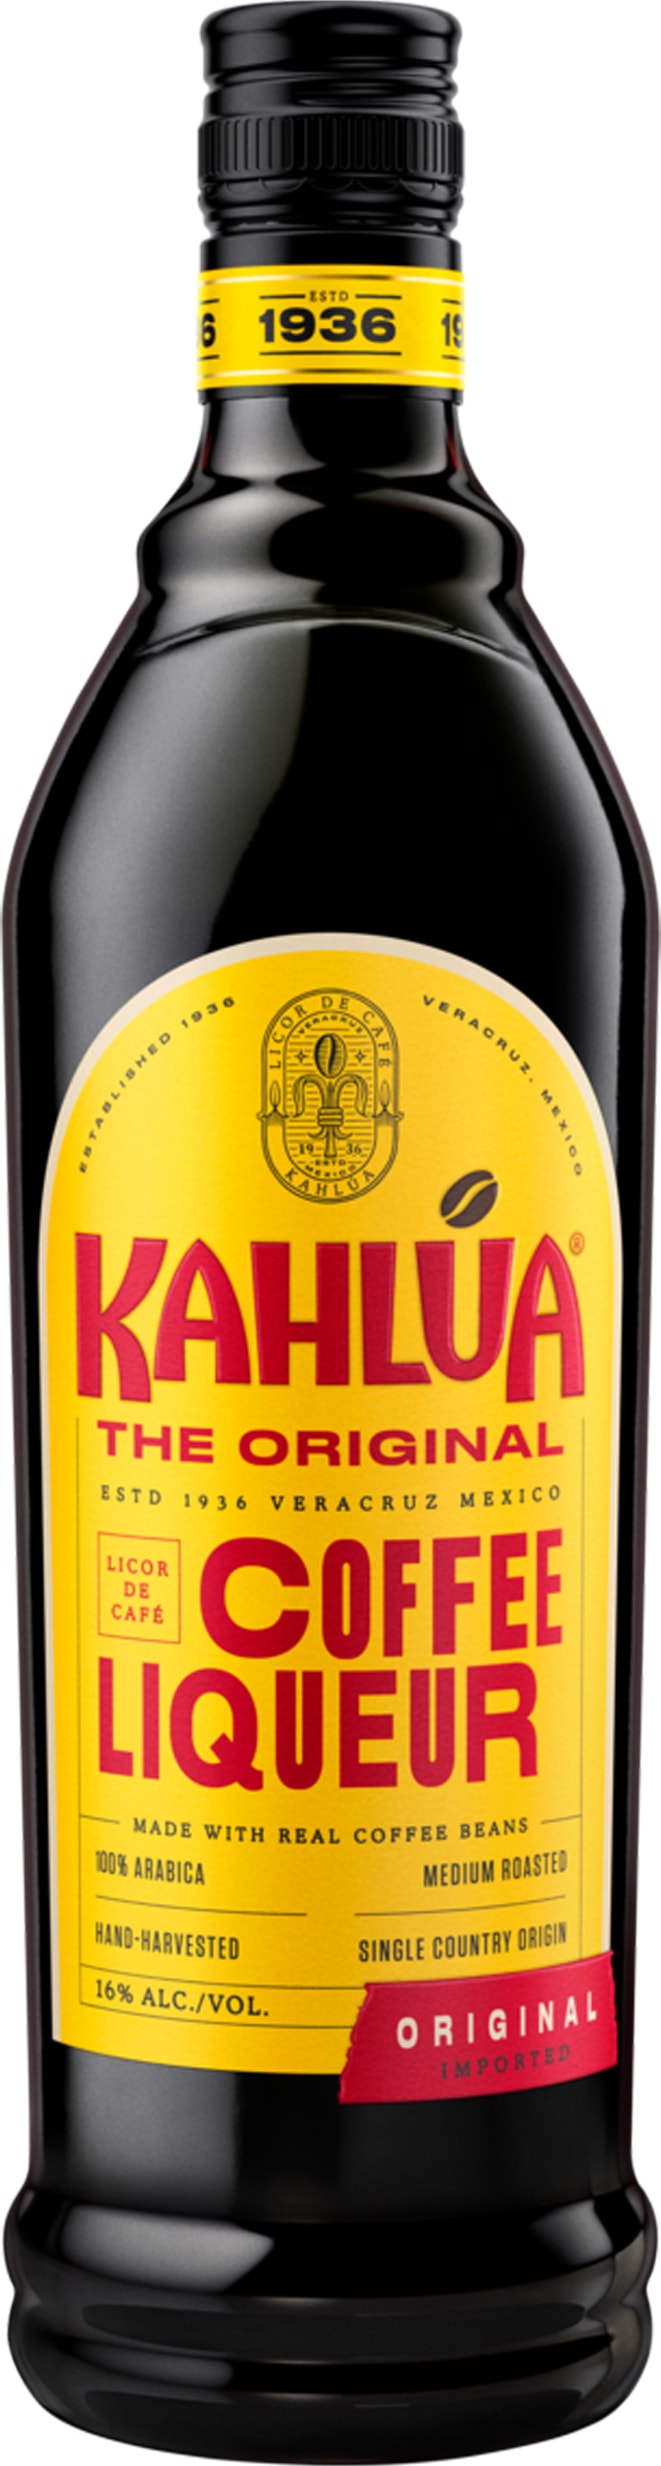 Kahlua Kahlua Coffee Liqueur 70cl NV - Buy Kahlua Wines from GREAT WINES DIRECT wine shop